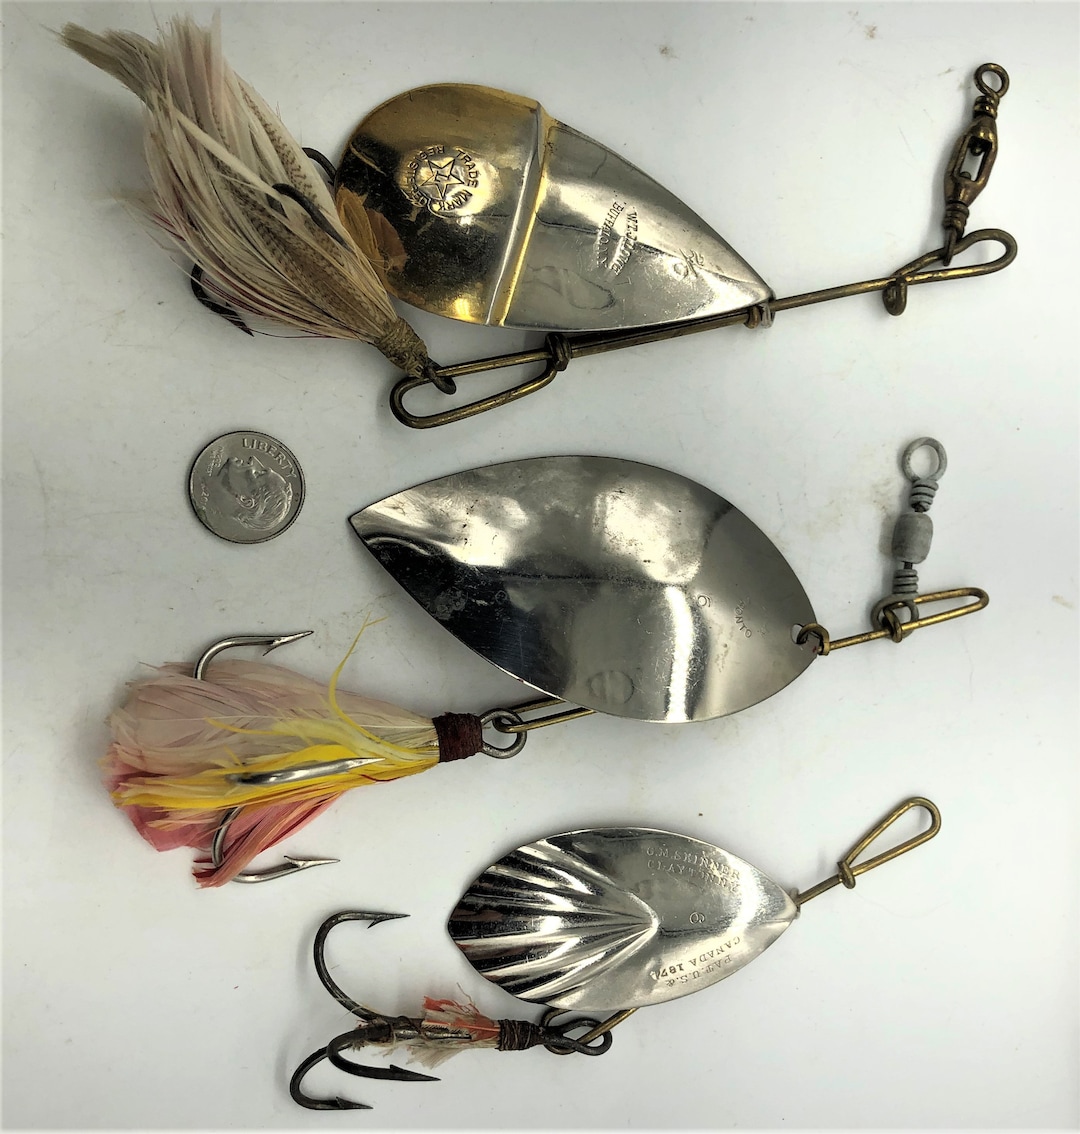 Three Large Old Metal Trolling Fishing Spoons/lures 2 